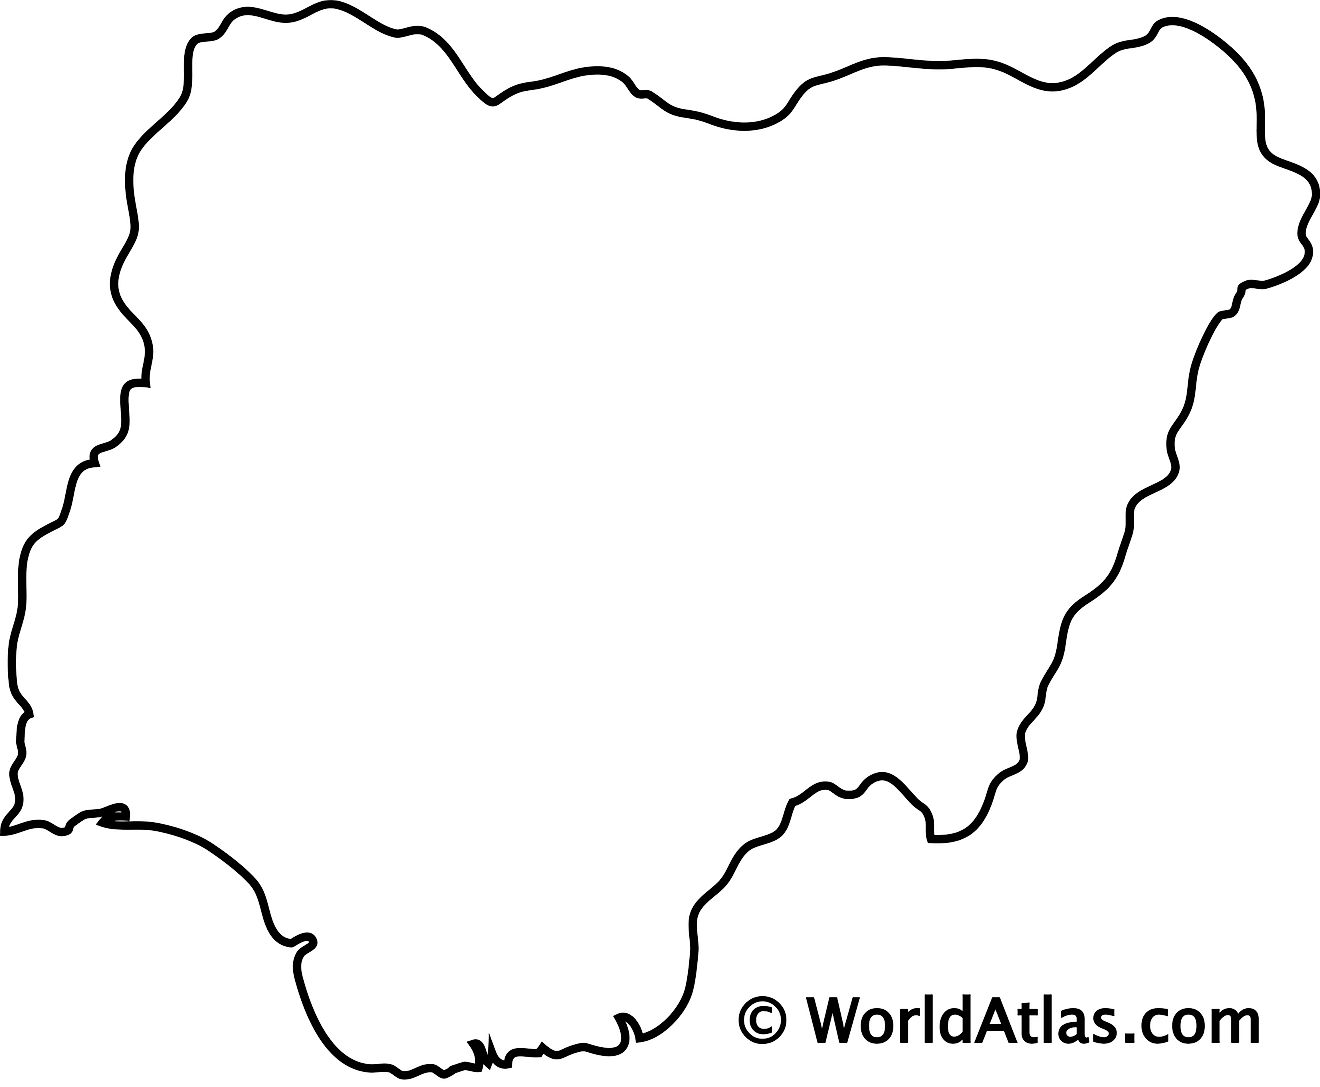 Nigeria Maps & Facts World Atlas